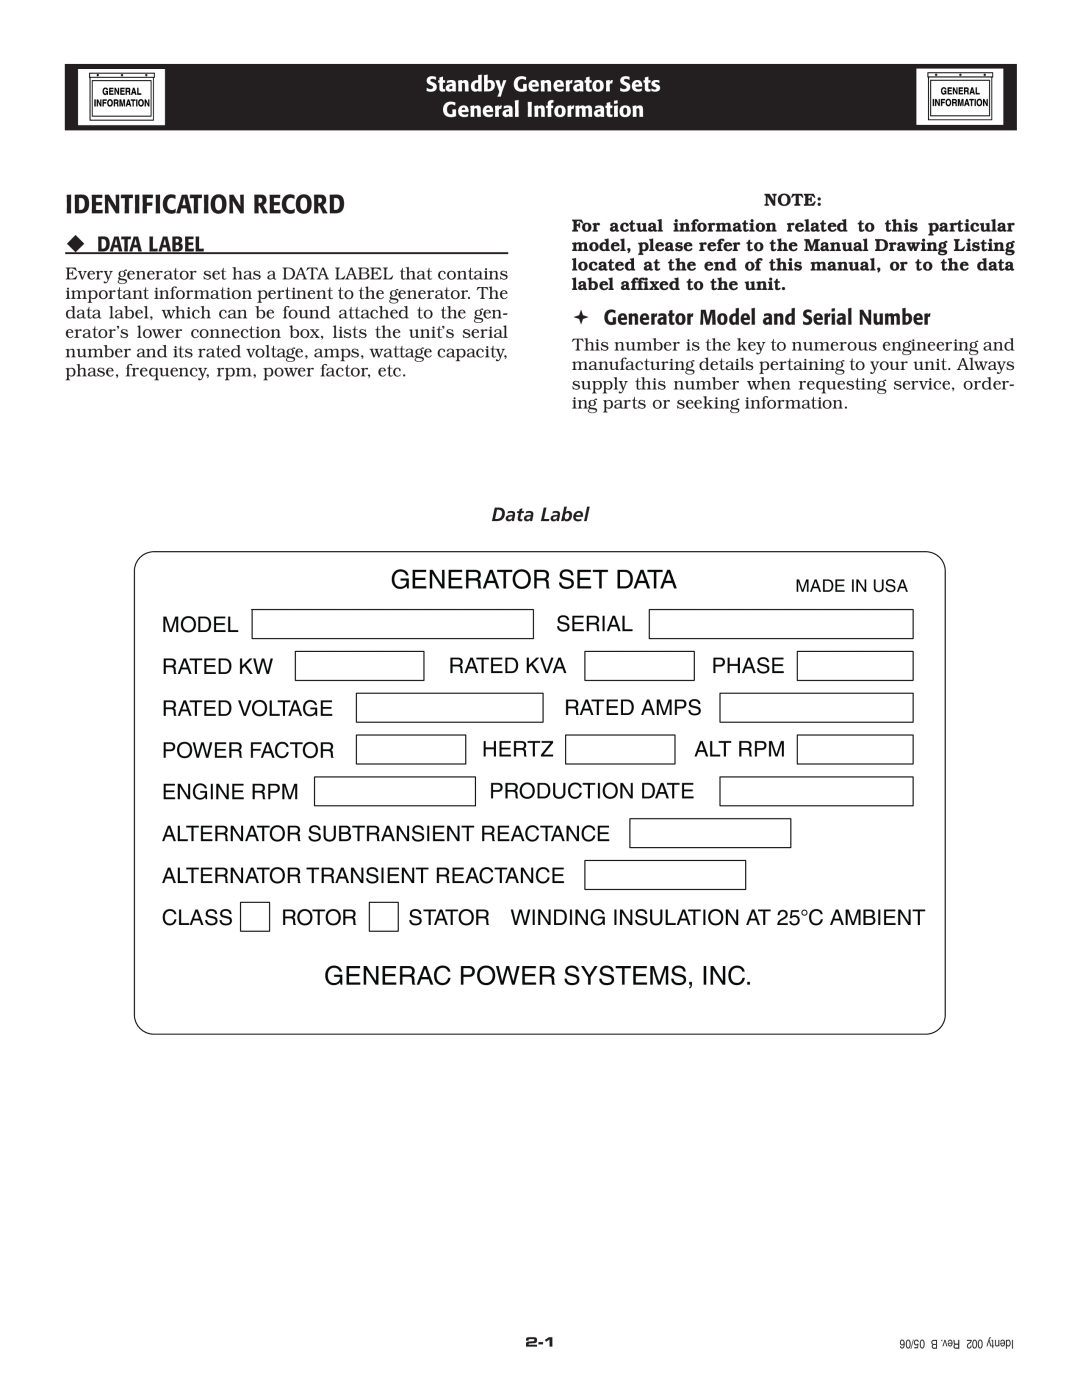 Guardian Technologies 005336-1, 005337-1 Identification Record, Standby Generator Sets General Information, ‹Data Label 